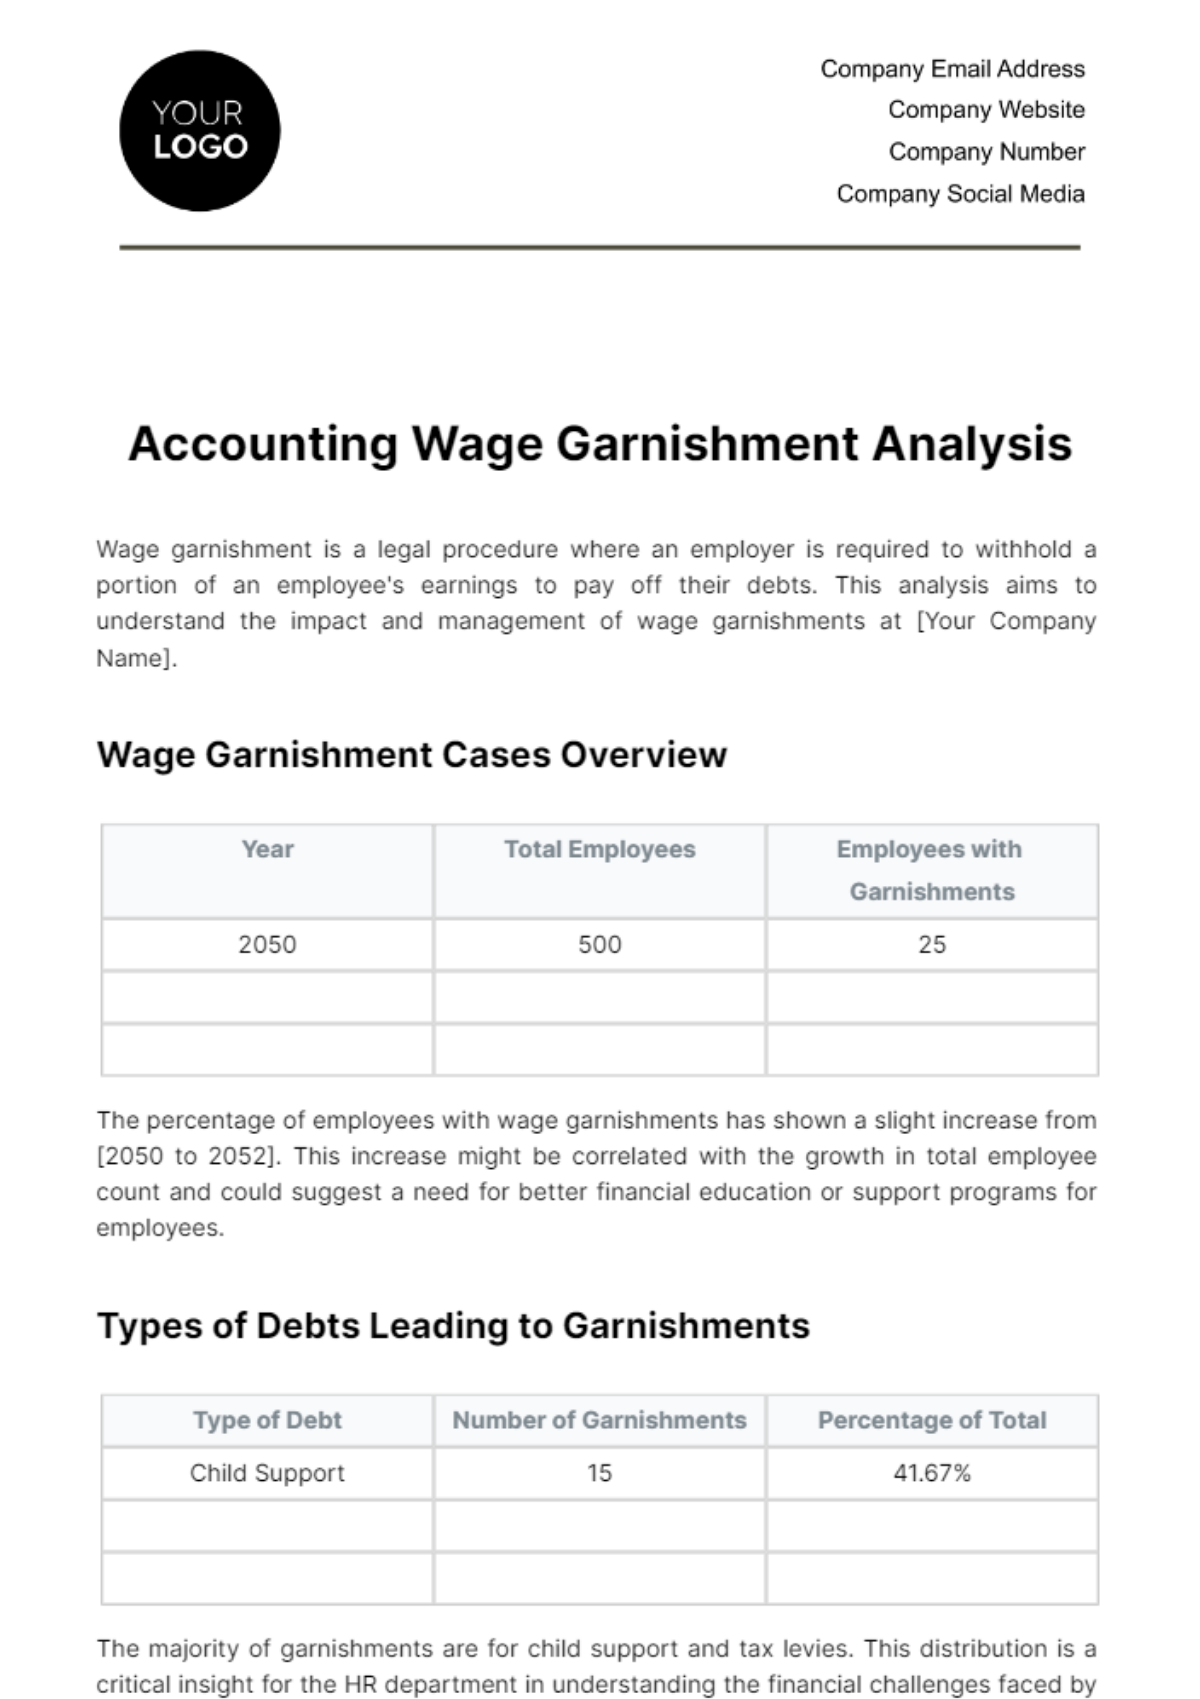 Accounting Wage Garnishment Analysis Template